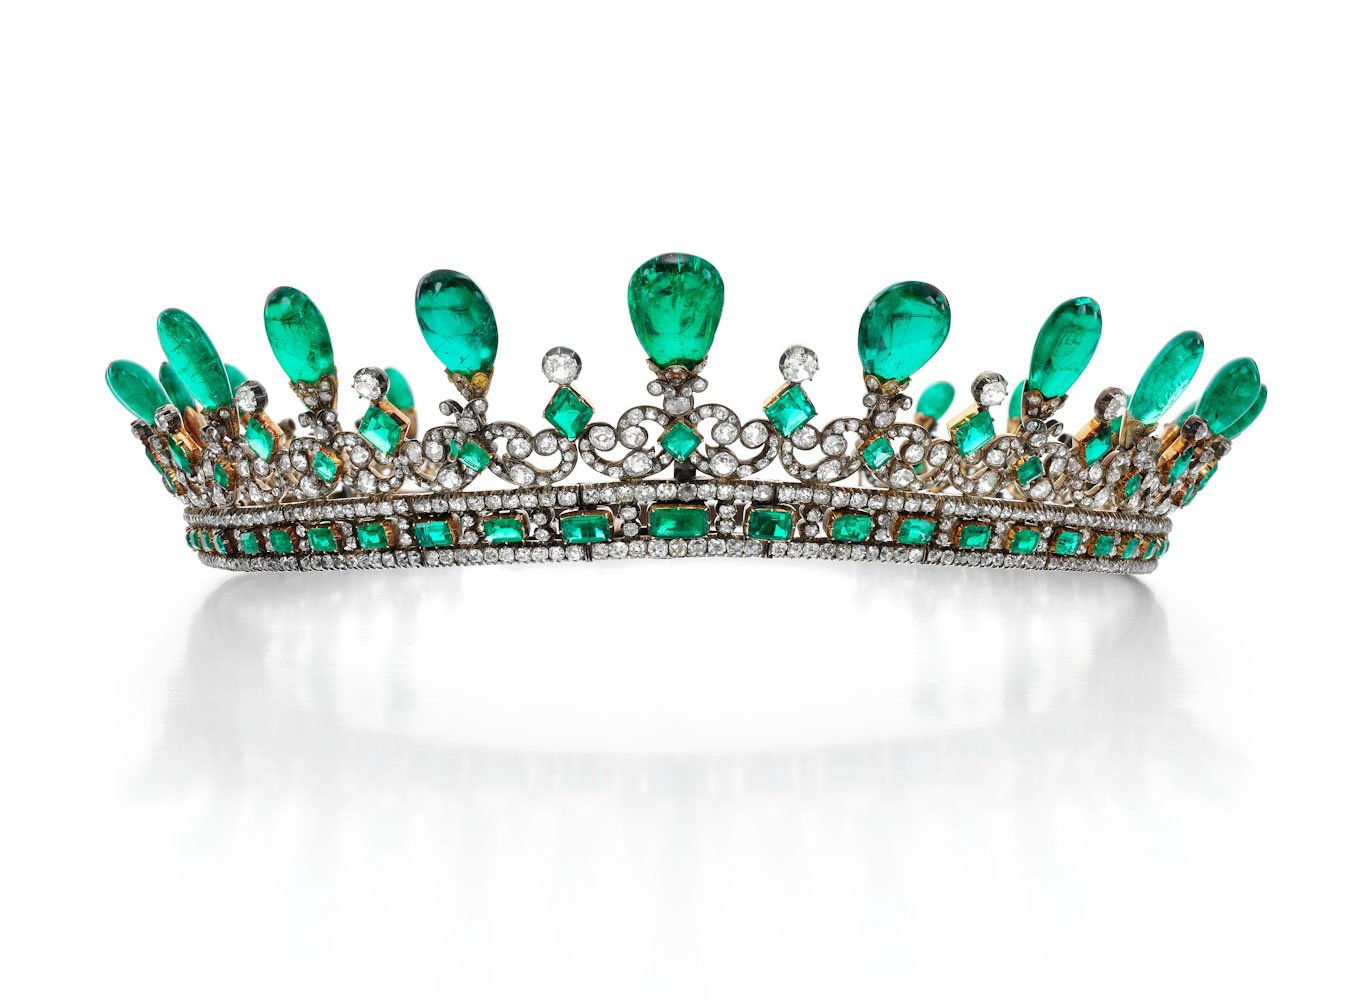 Queen Victoria’s Emerald and Diamond Tiara